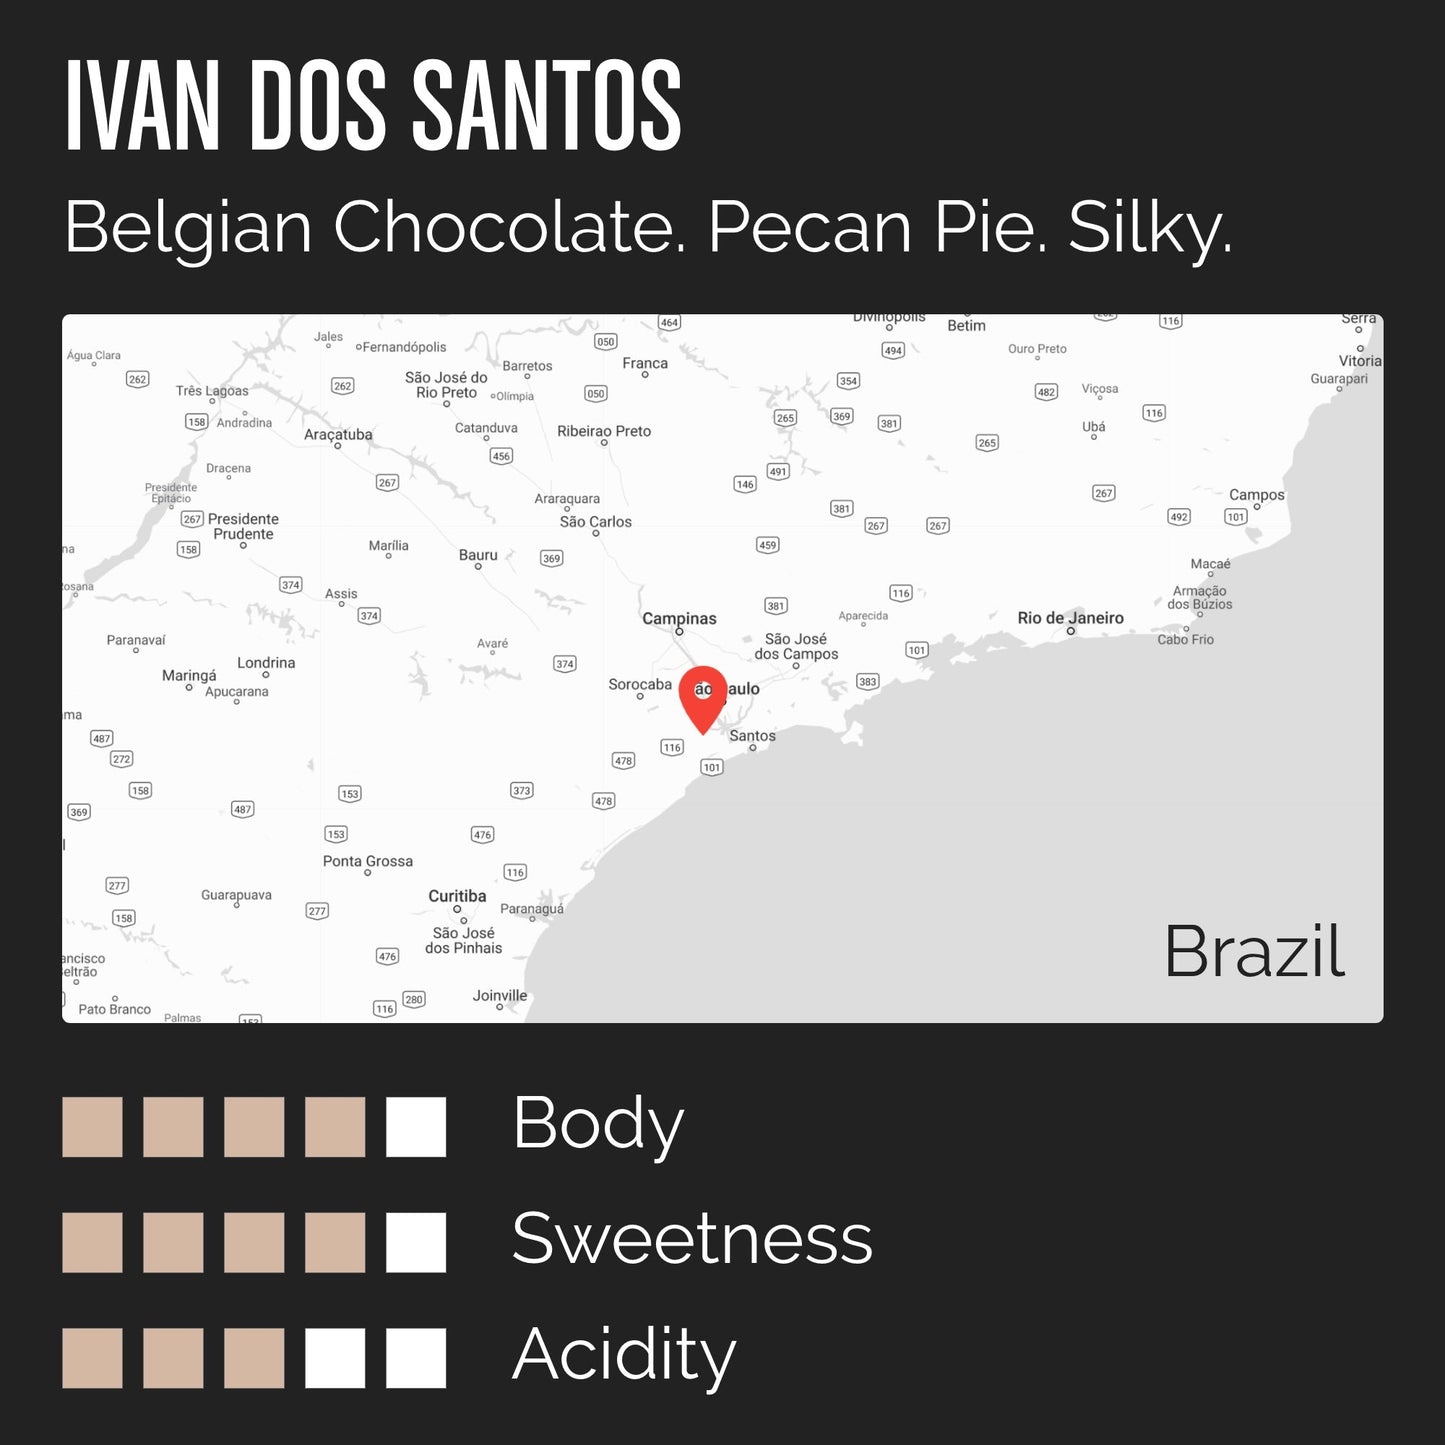 Ivan dos Santos info card with tasting notes: Belgian Chocoalte. Pecan Pie. Silky.